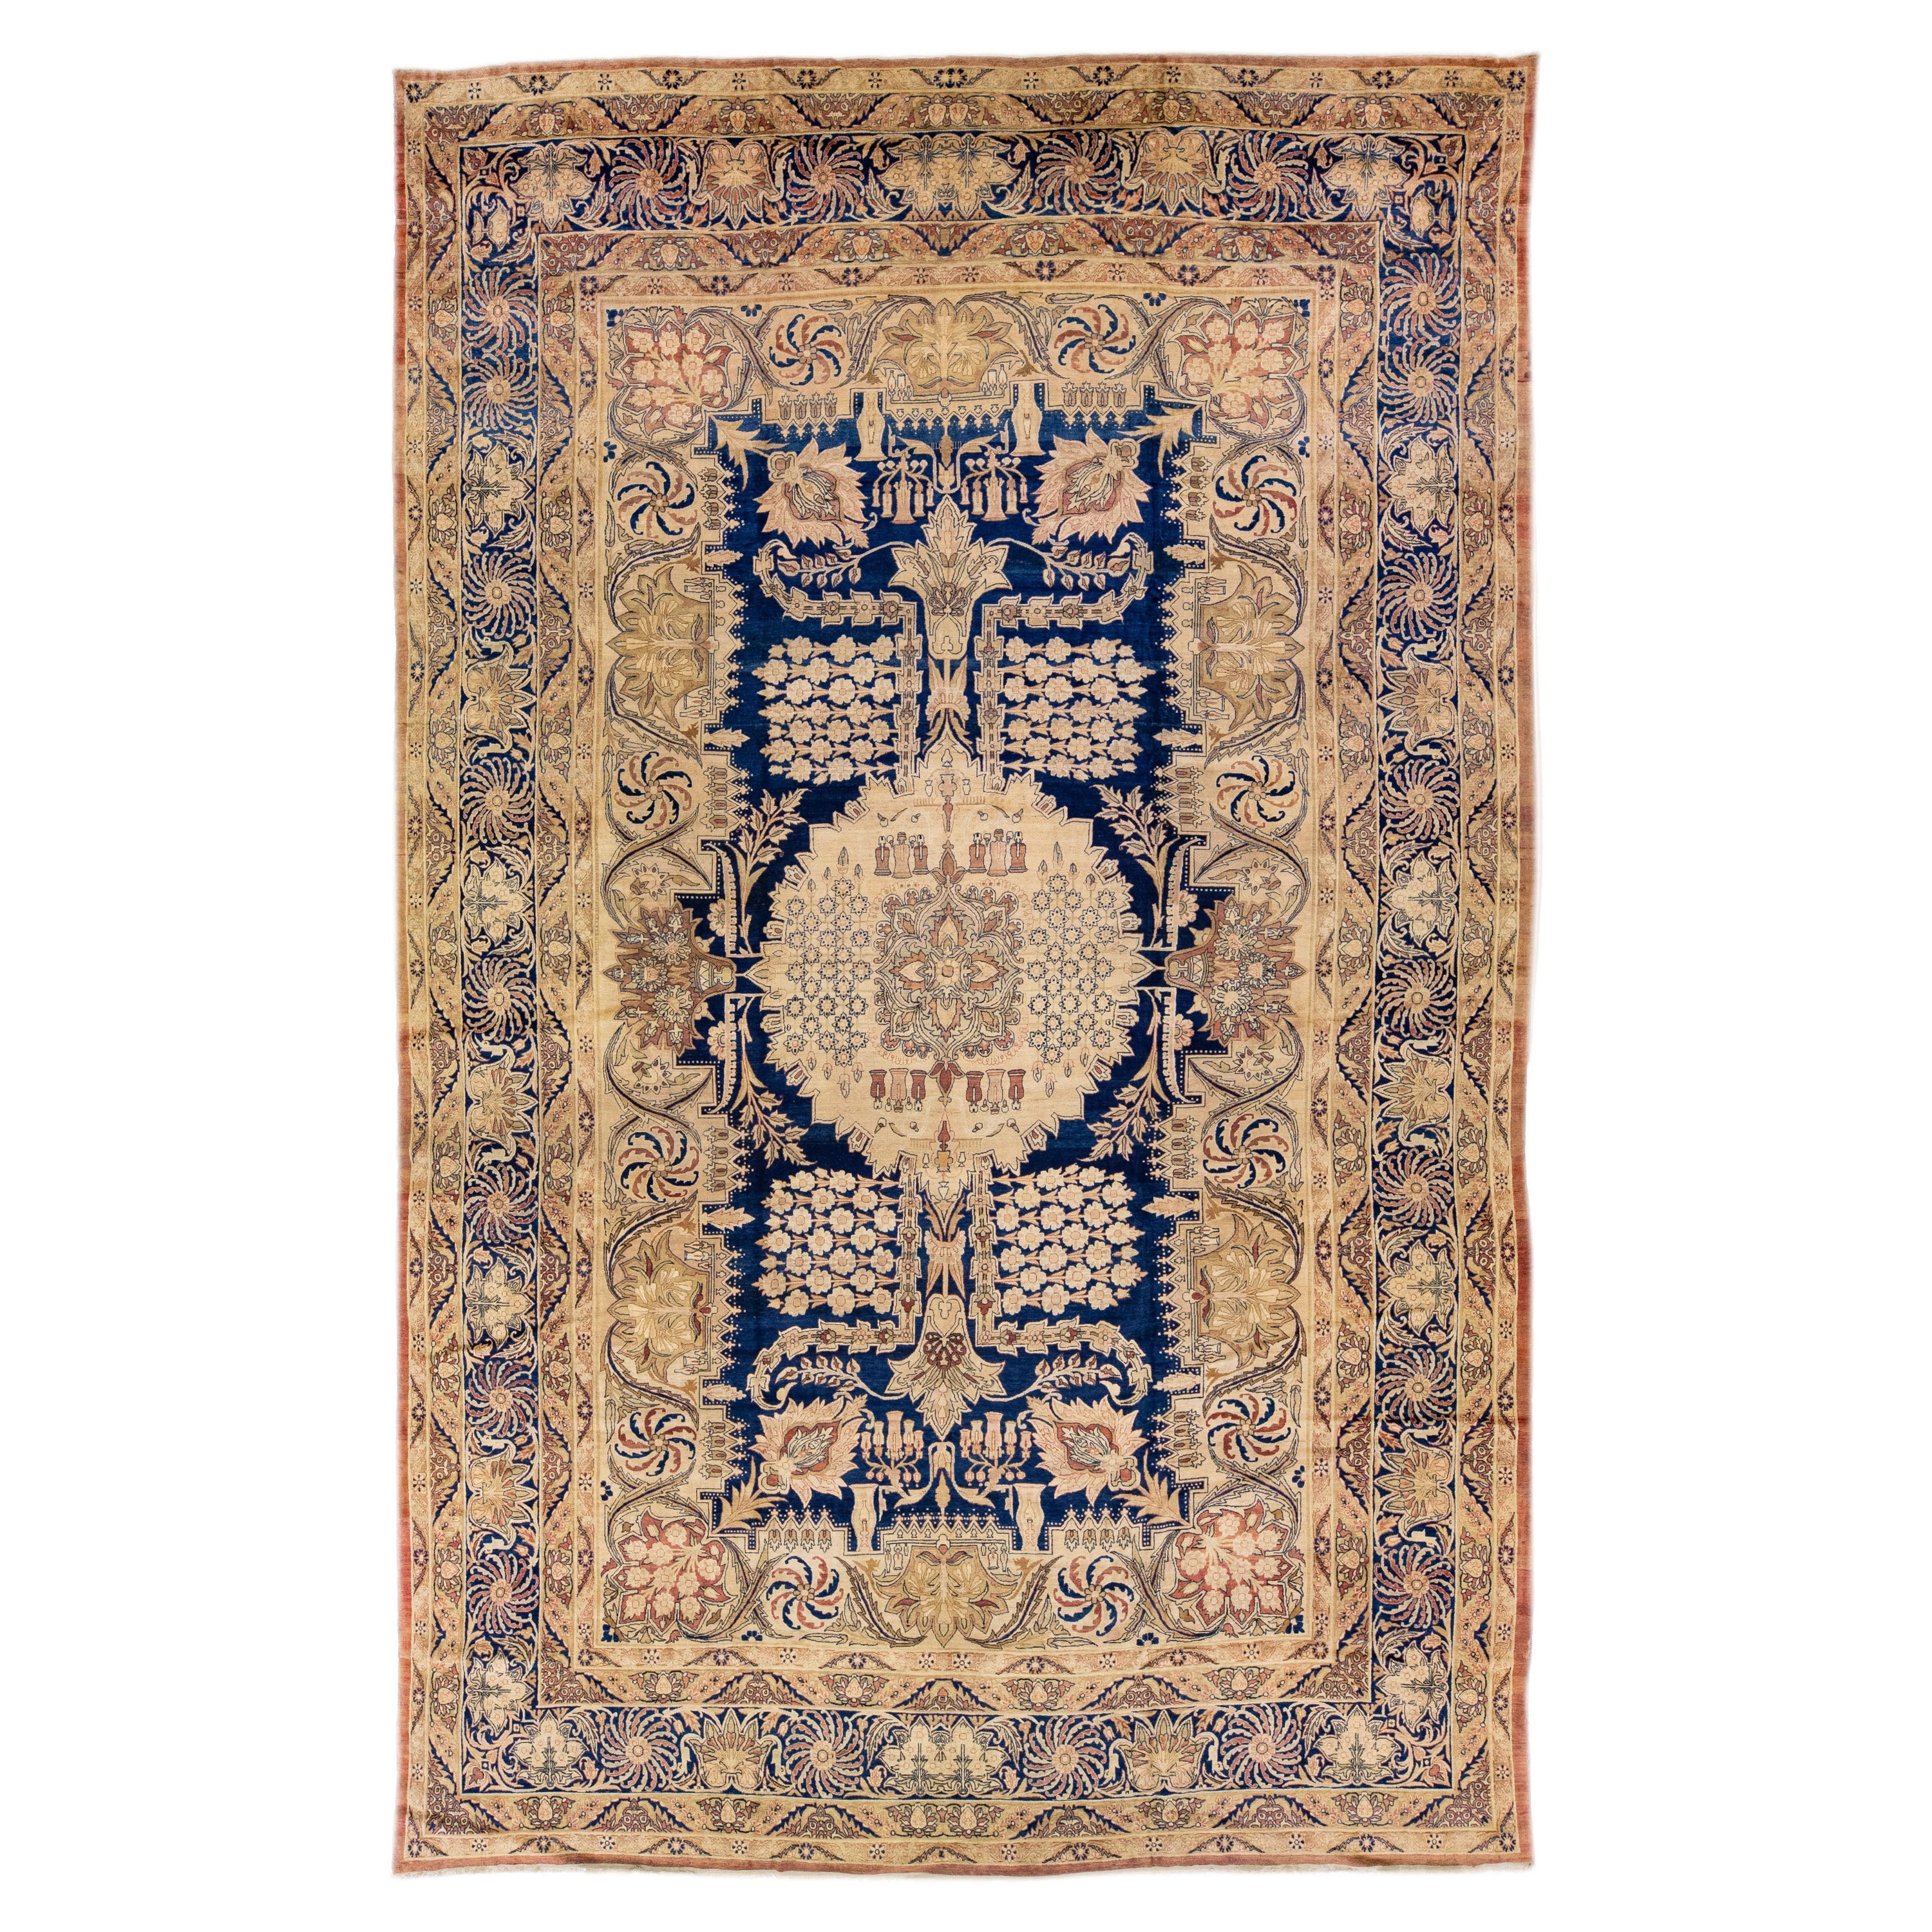 Antique Kerman Handmade Beige & Blue Persian Wool Rug with Allover Pattern